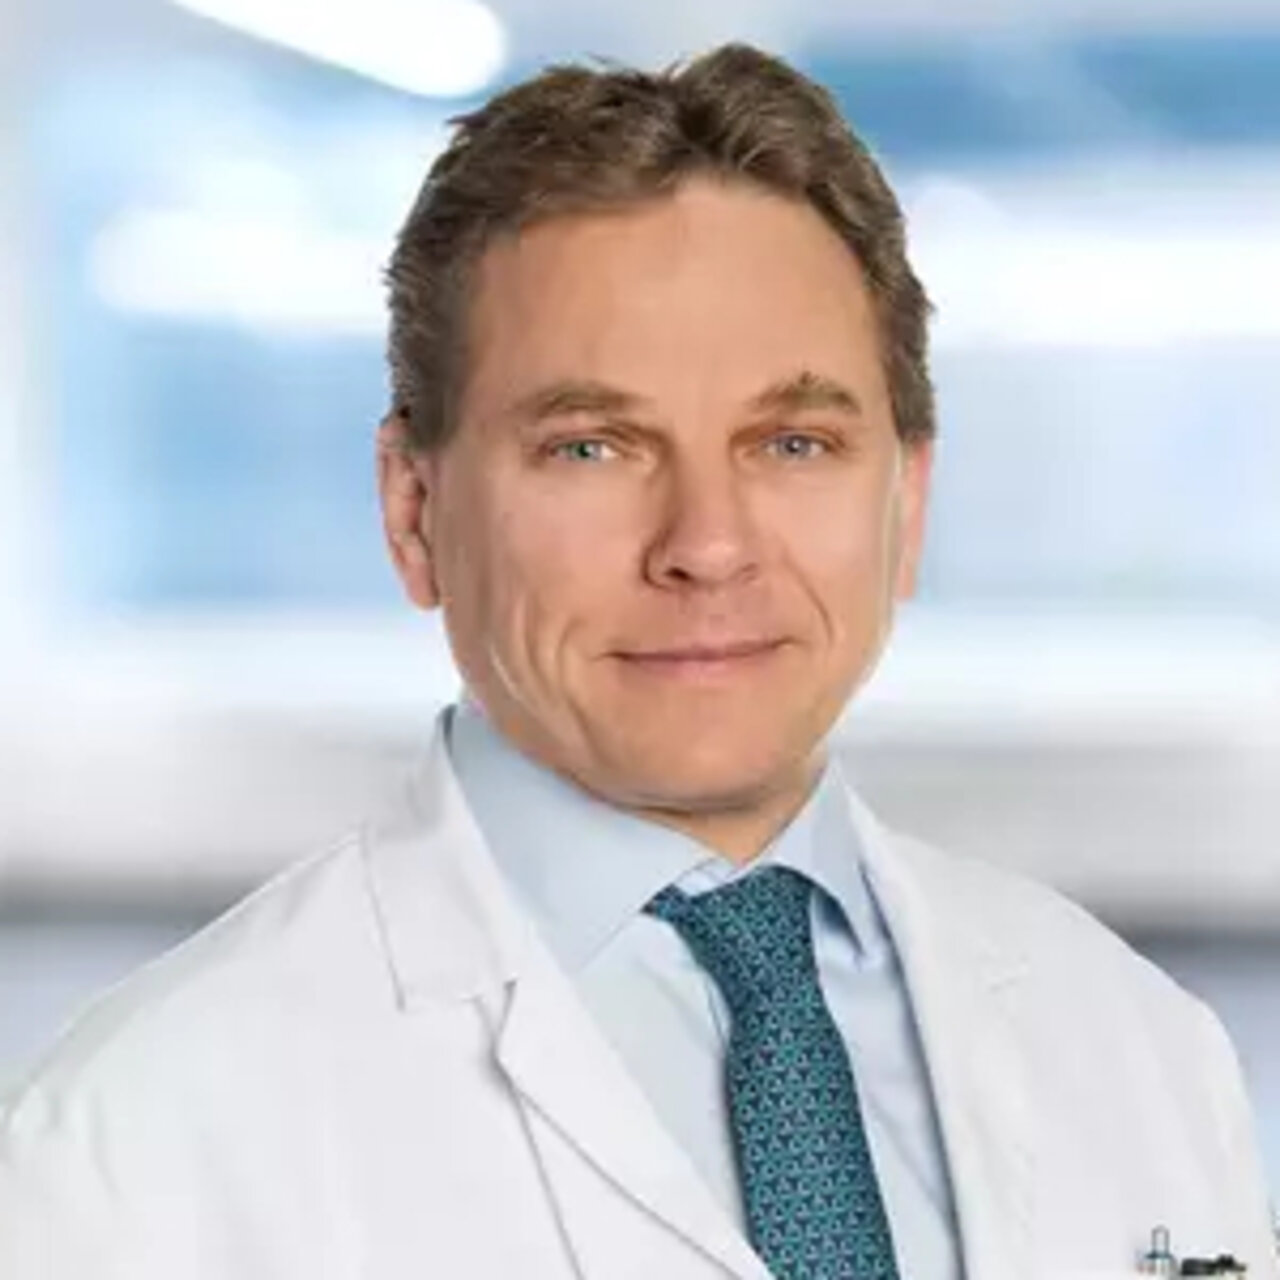 Prof. Dr. med. Michael Müller - Spezialist für Gynäkologie - Portrait